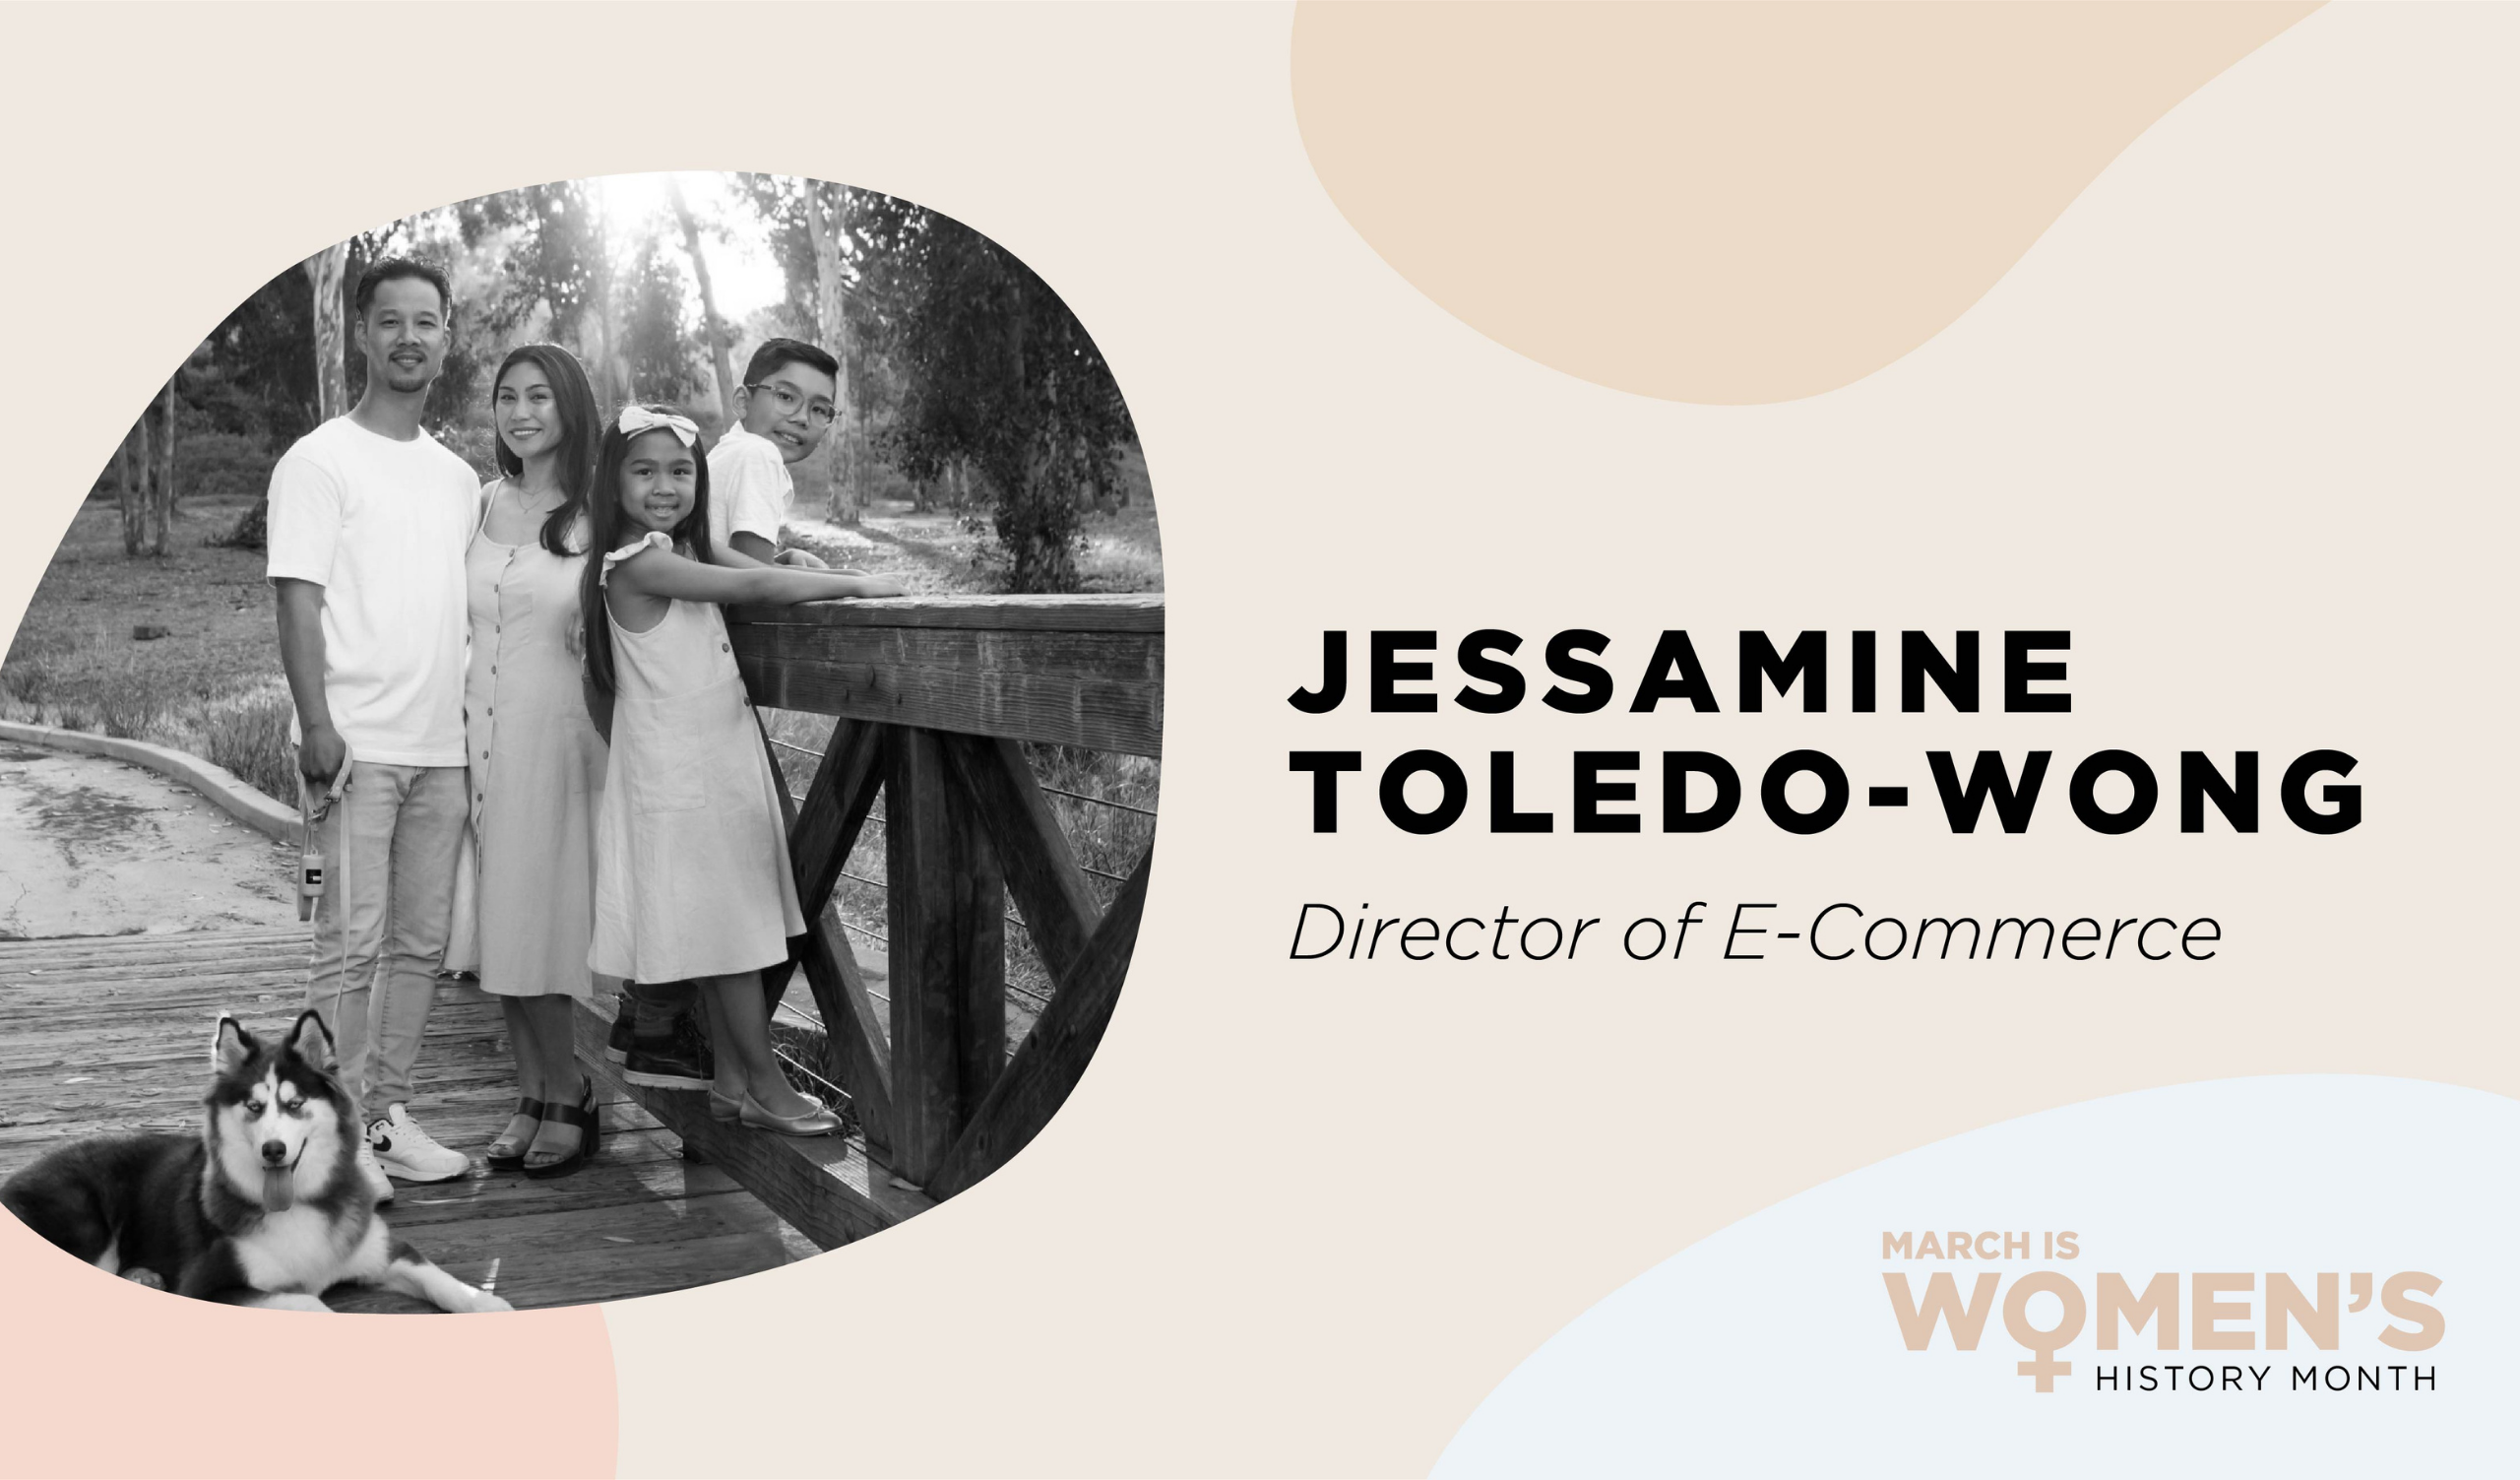 Women's History Month, we're spotlighting Director of E-Commerce Jessamine Toledo-Wong